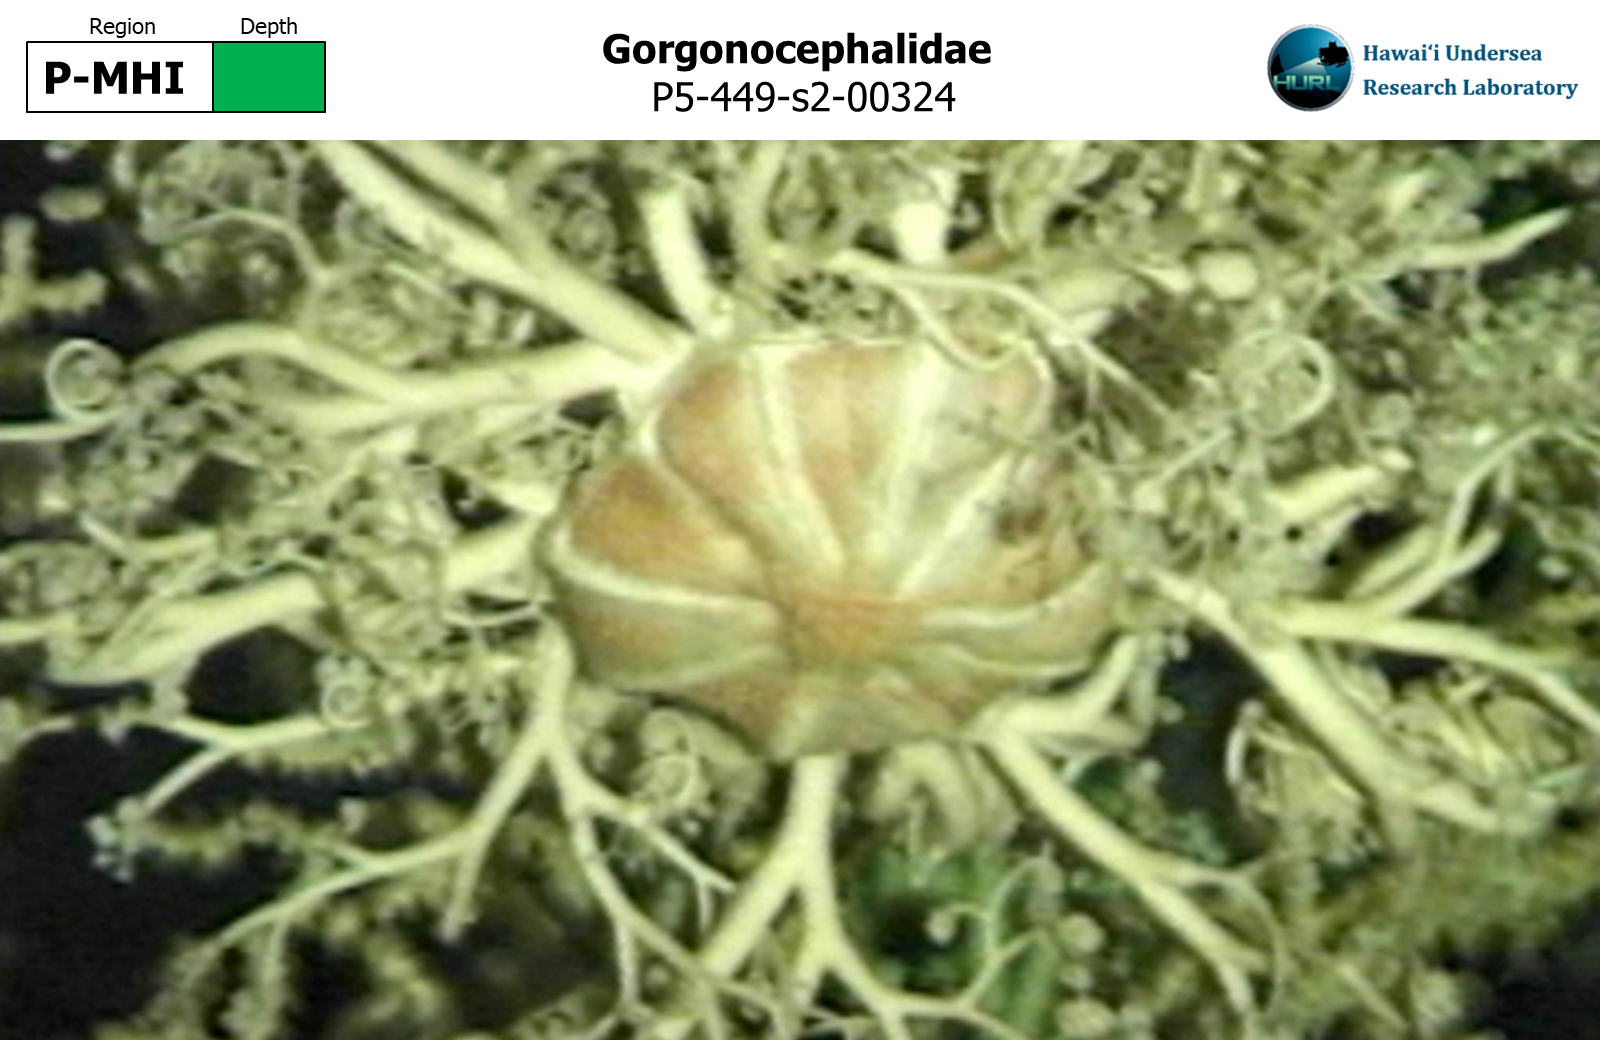 Gorgonocephalidae